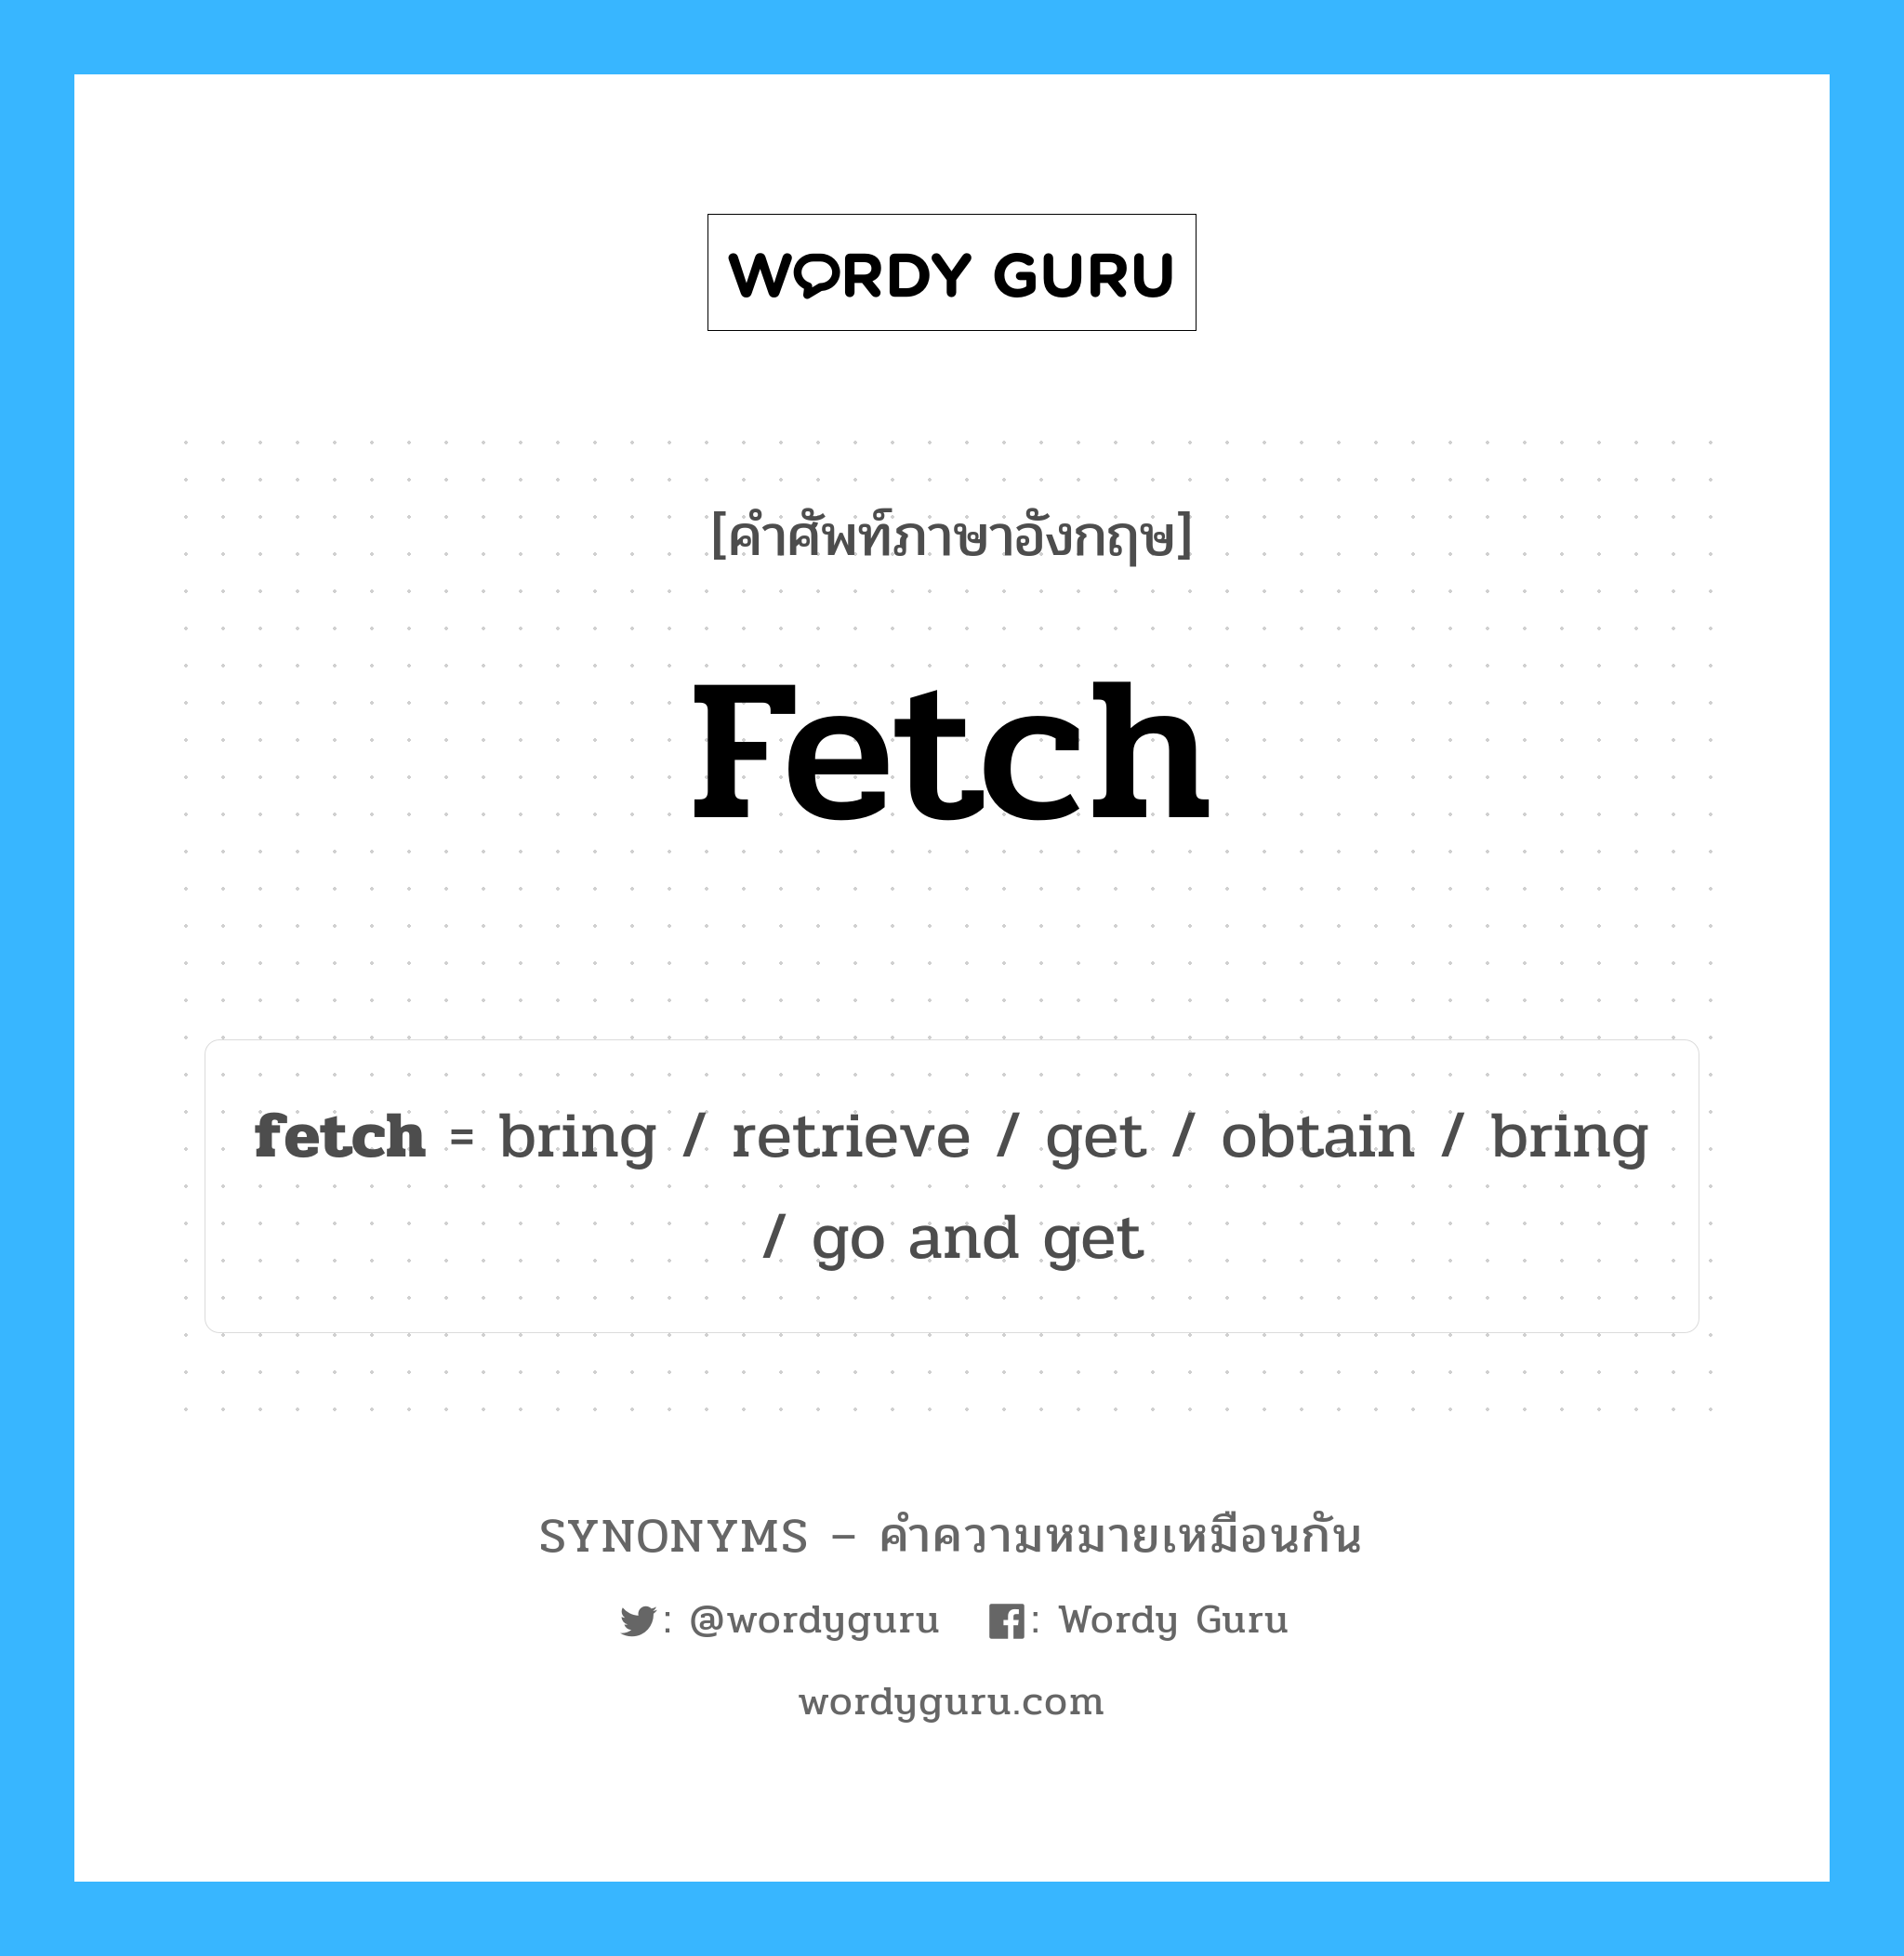 get เป็นหนึ่งใน take และมีคำอื่น ๆ อีกดังนี้, คำศัพท์ภาษาอังกฤษ get ความหมายคล้ายกันกับ fetch แปลว่า รับ หมวด fetch